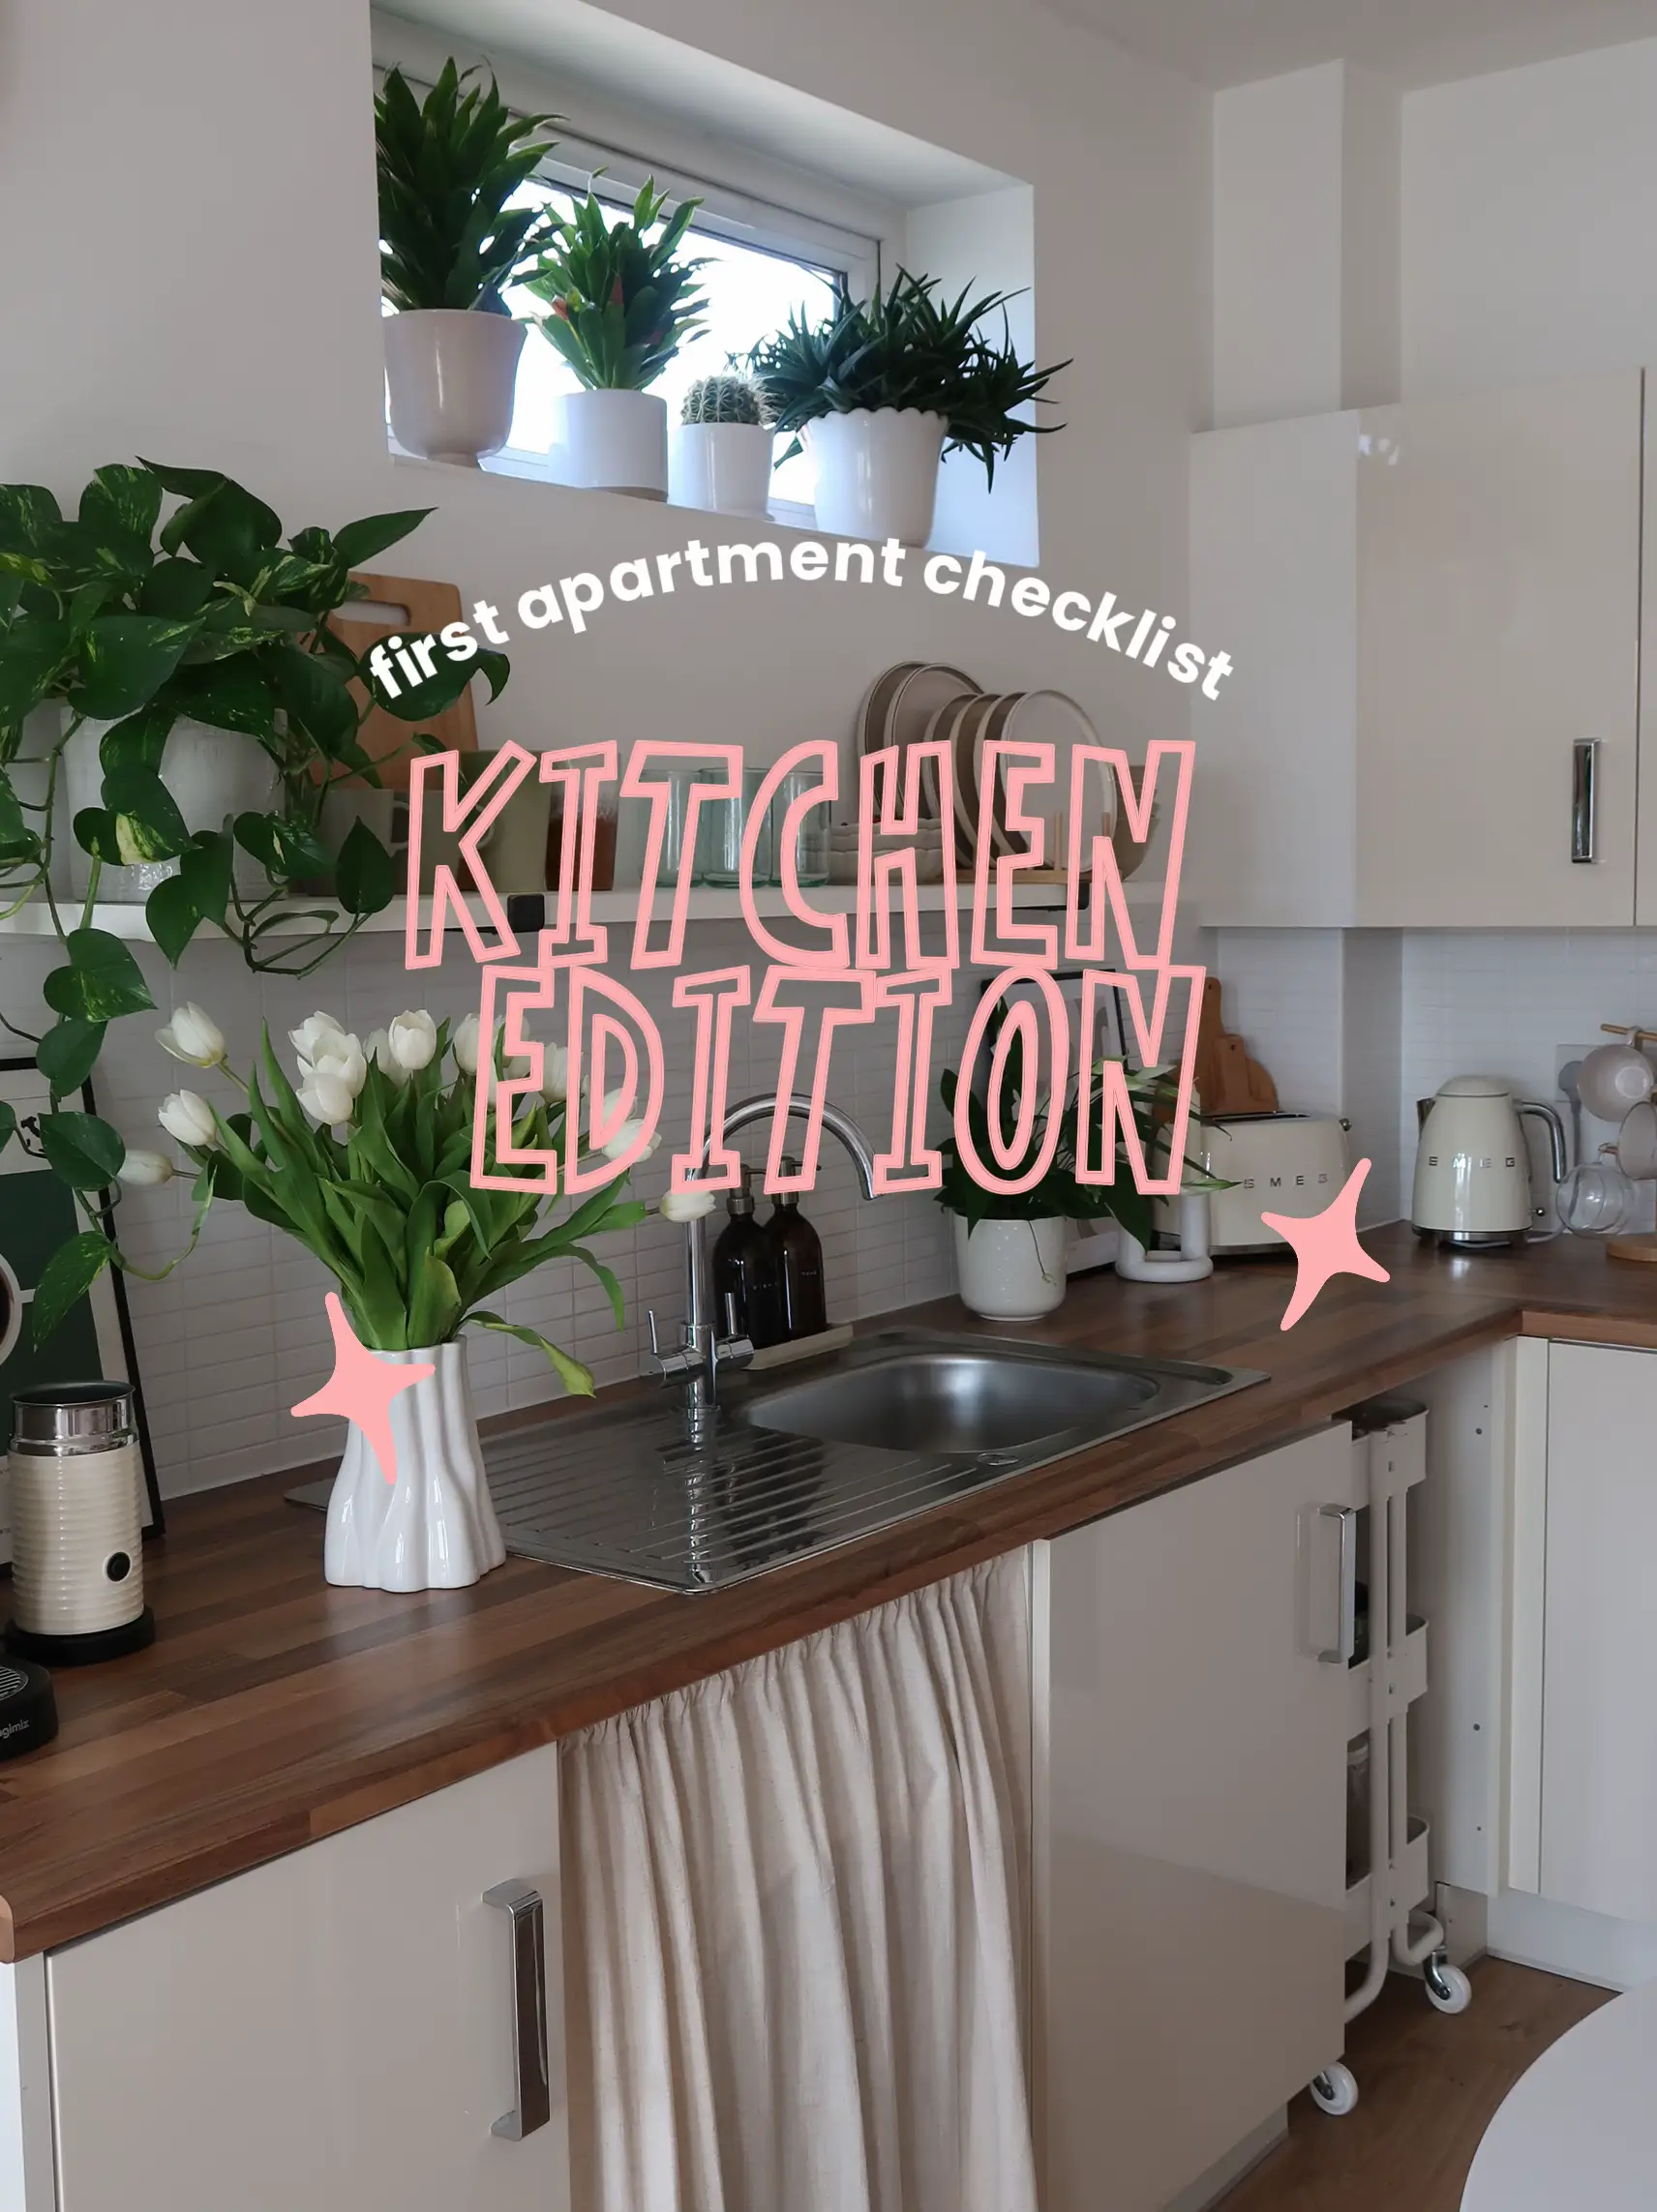 The Ultimate Apartment Kitchen Essentials Checklist - Delightfully Sarah